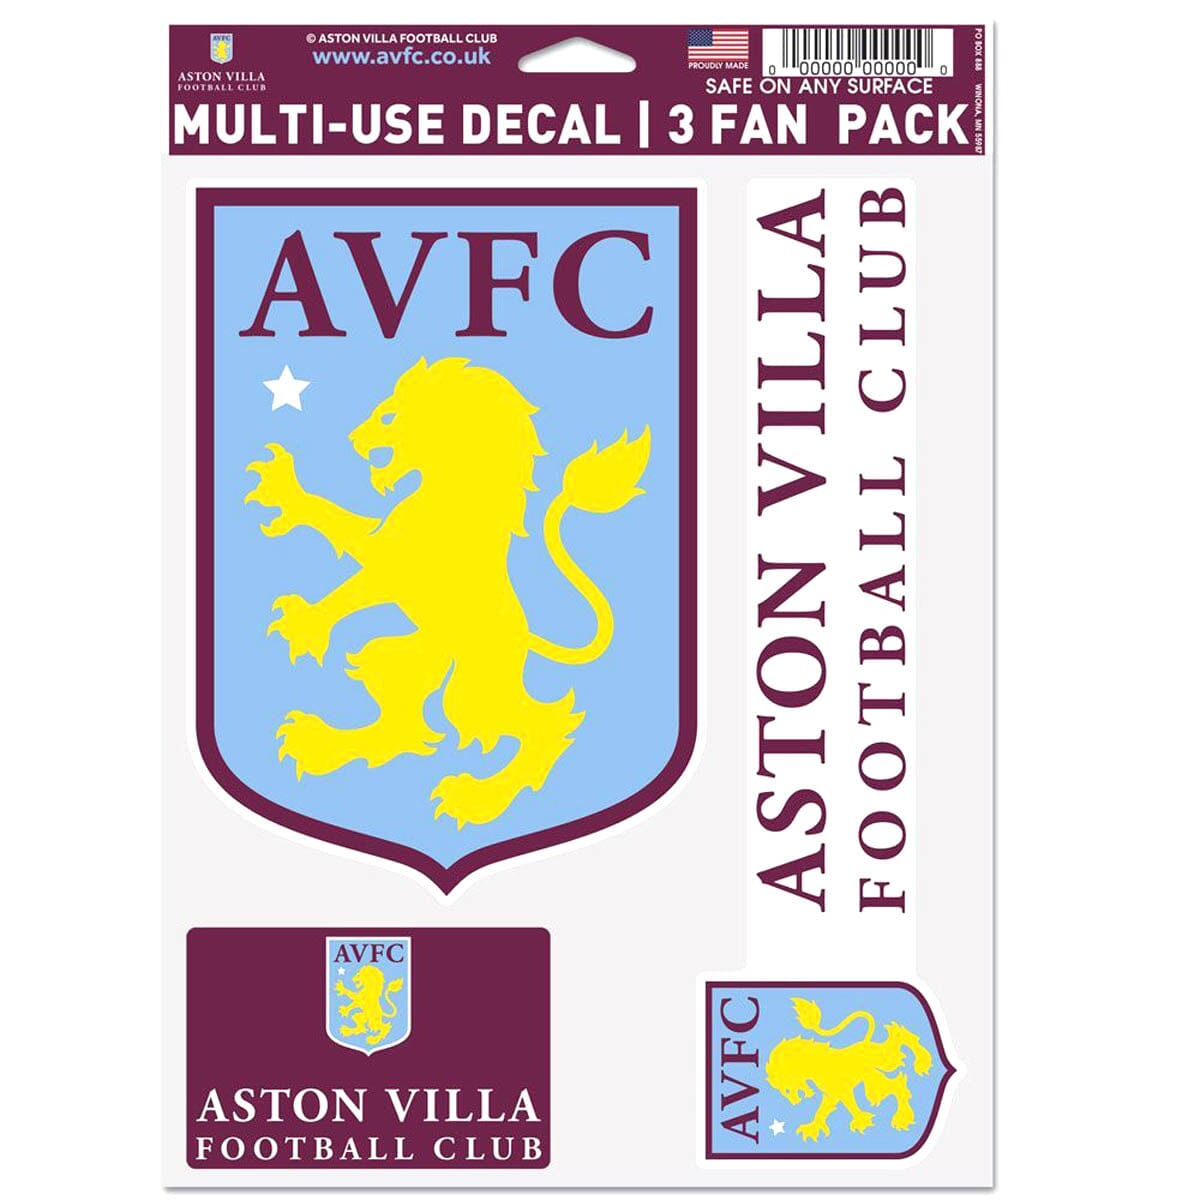 Hotel retort Spaceship WinCraft Aston Villa FC Multi Use Decal 3 Fan Pack